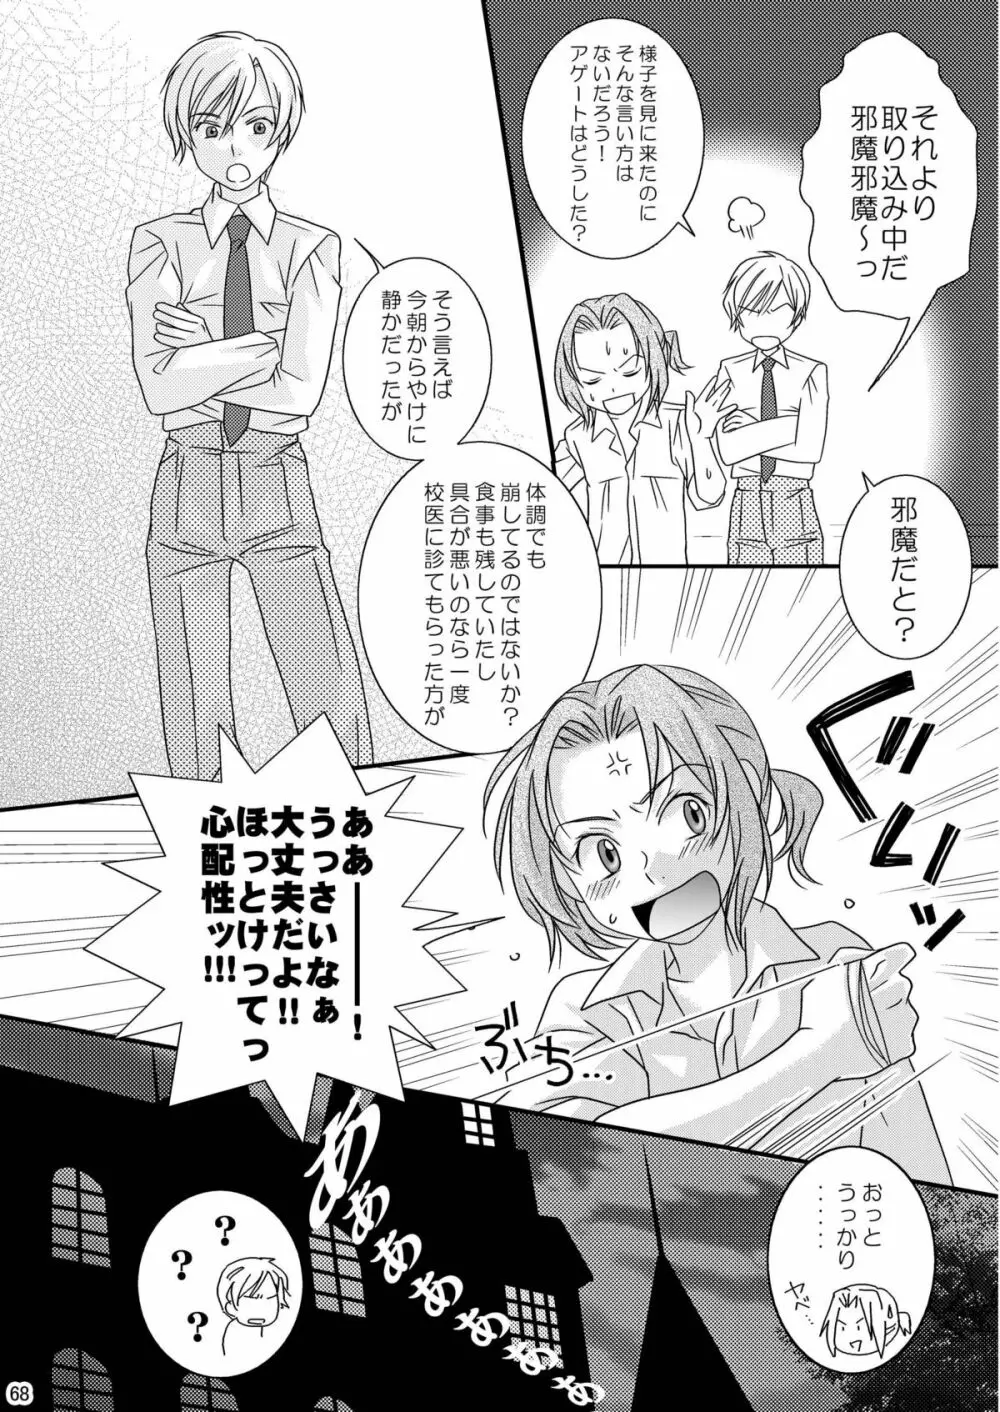 Re: ぷれい2 - page68